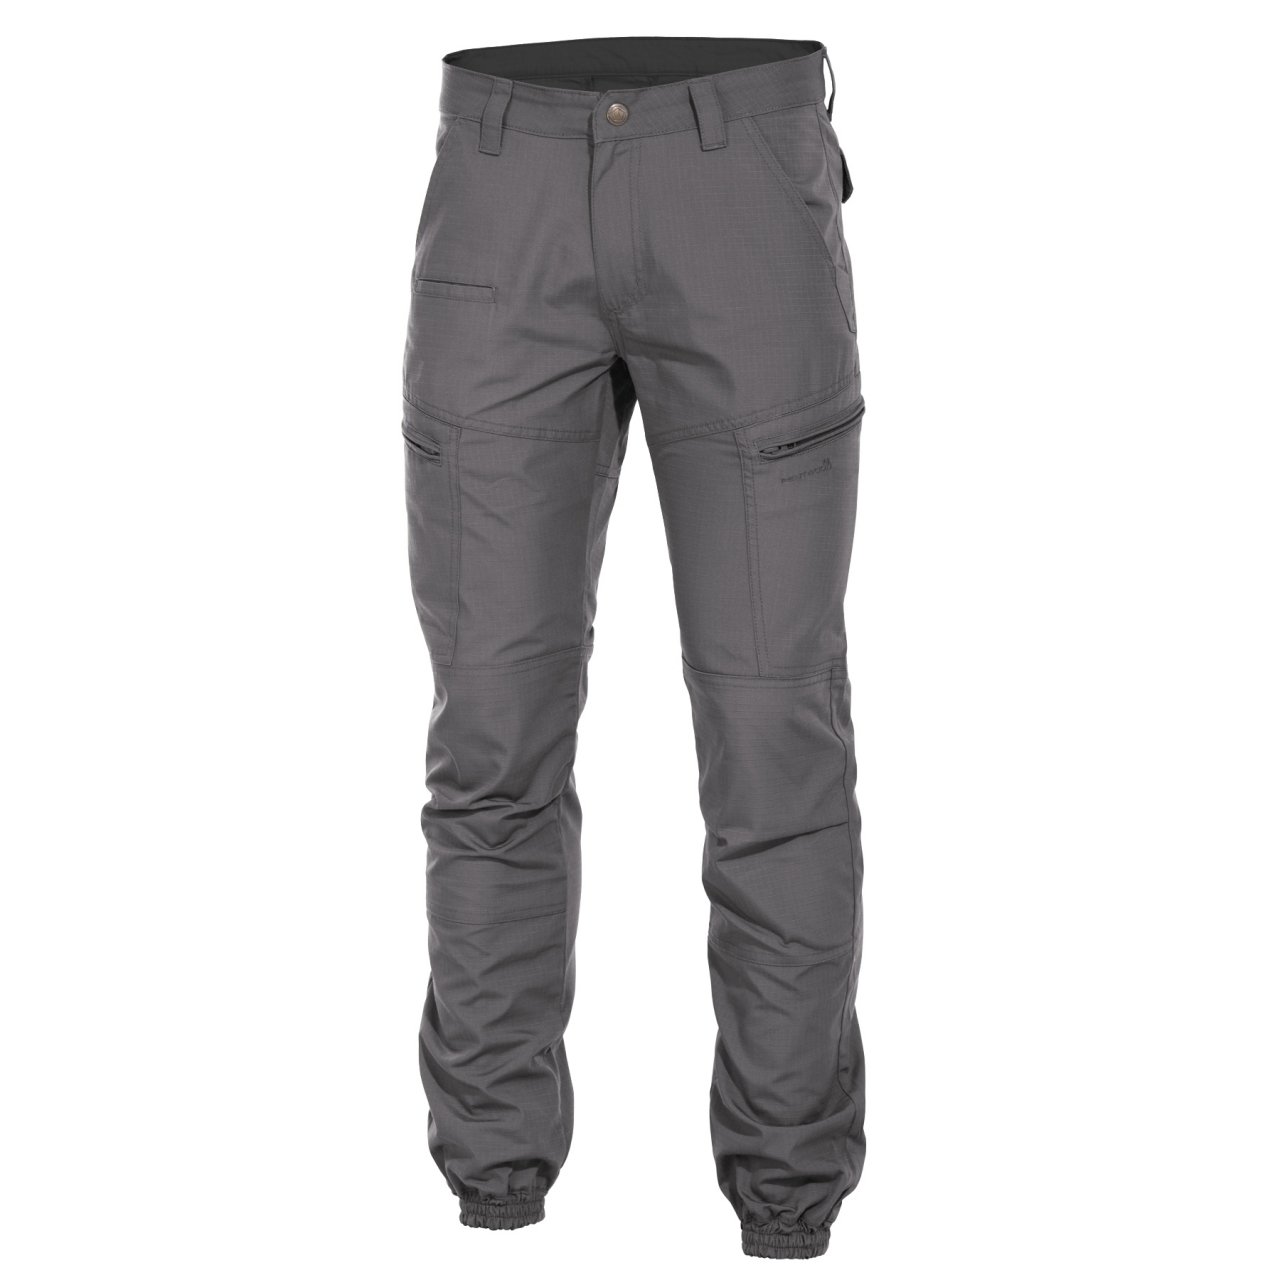 Kalhoty Pentagon Ypero - antracitové, 54 XL